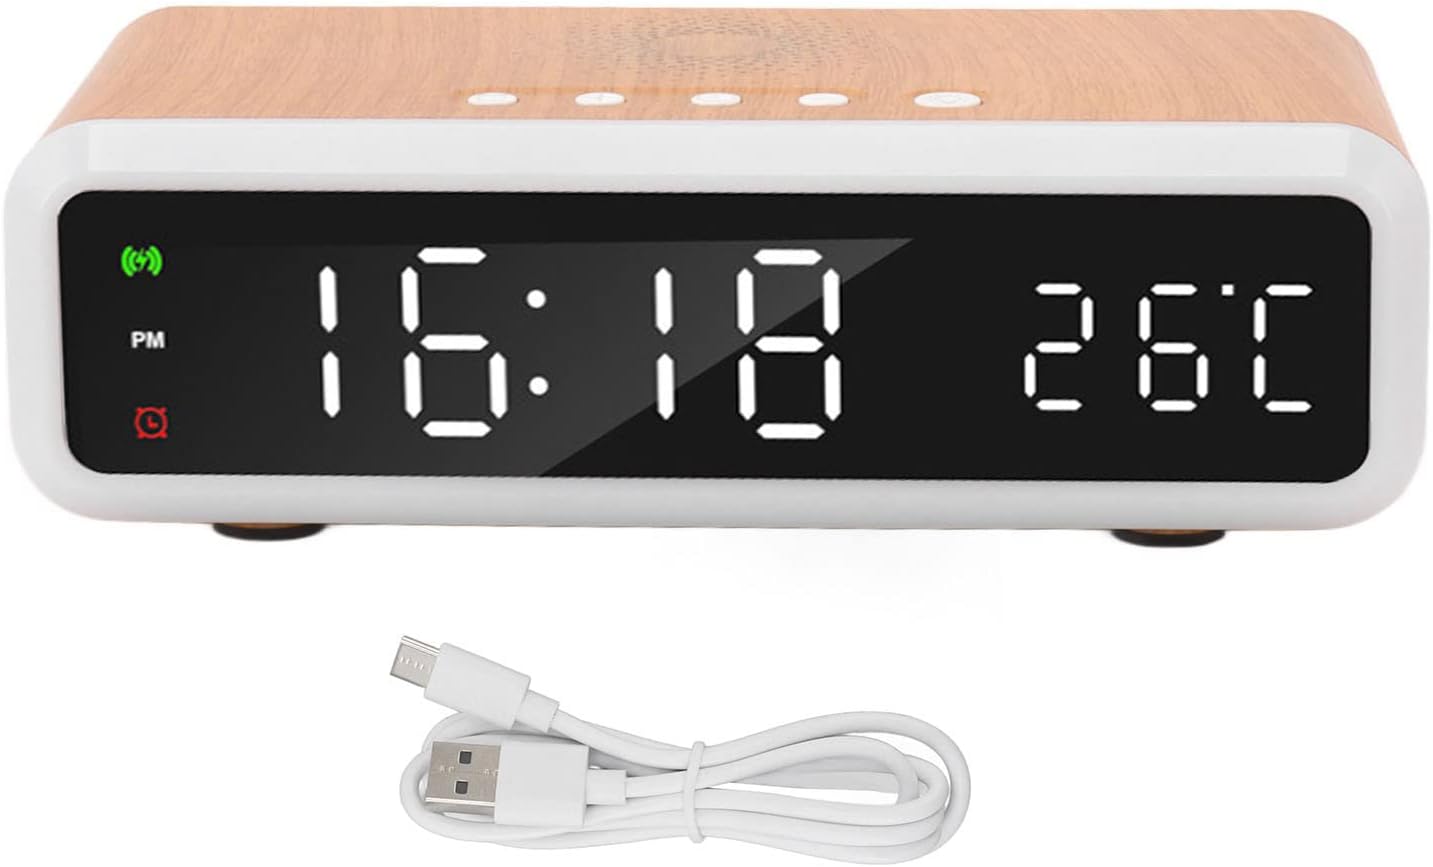 Multifunctional Alarm Clock